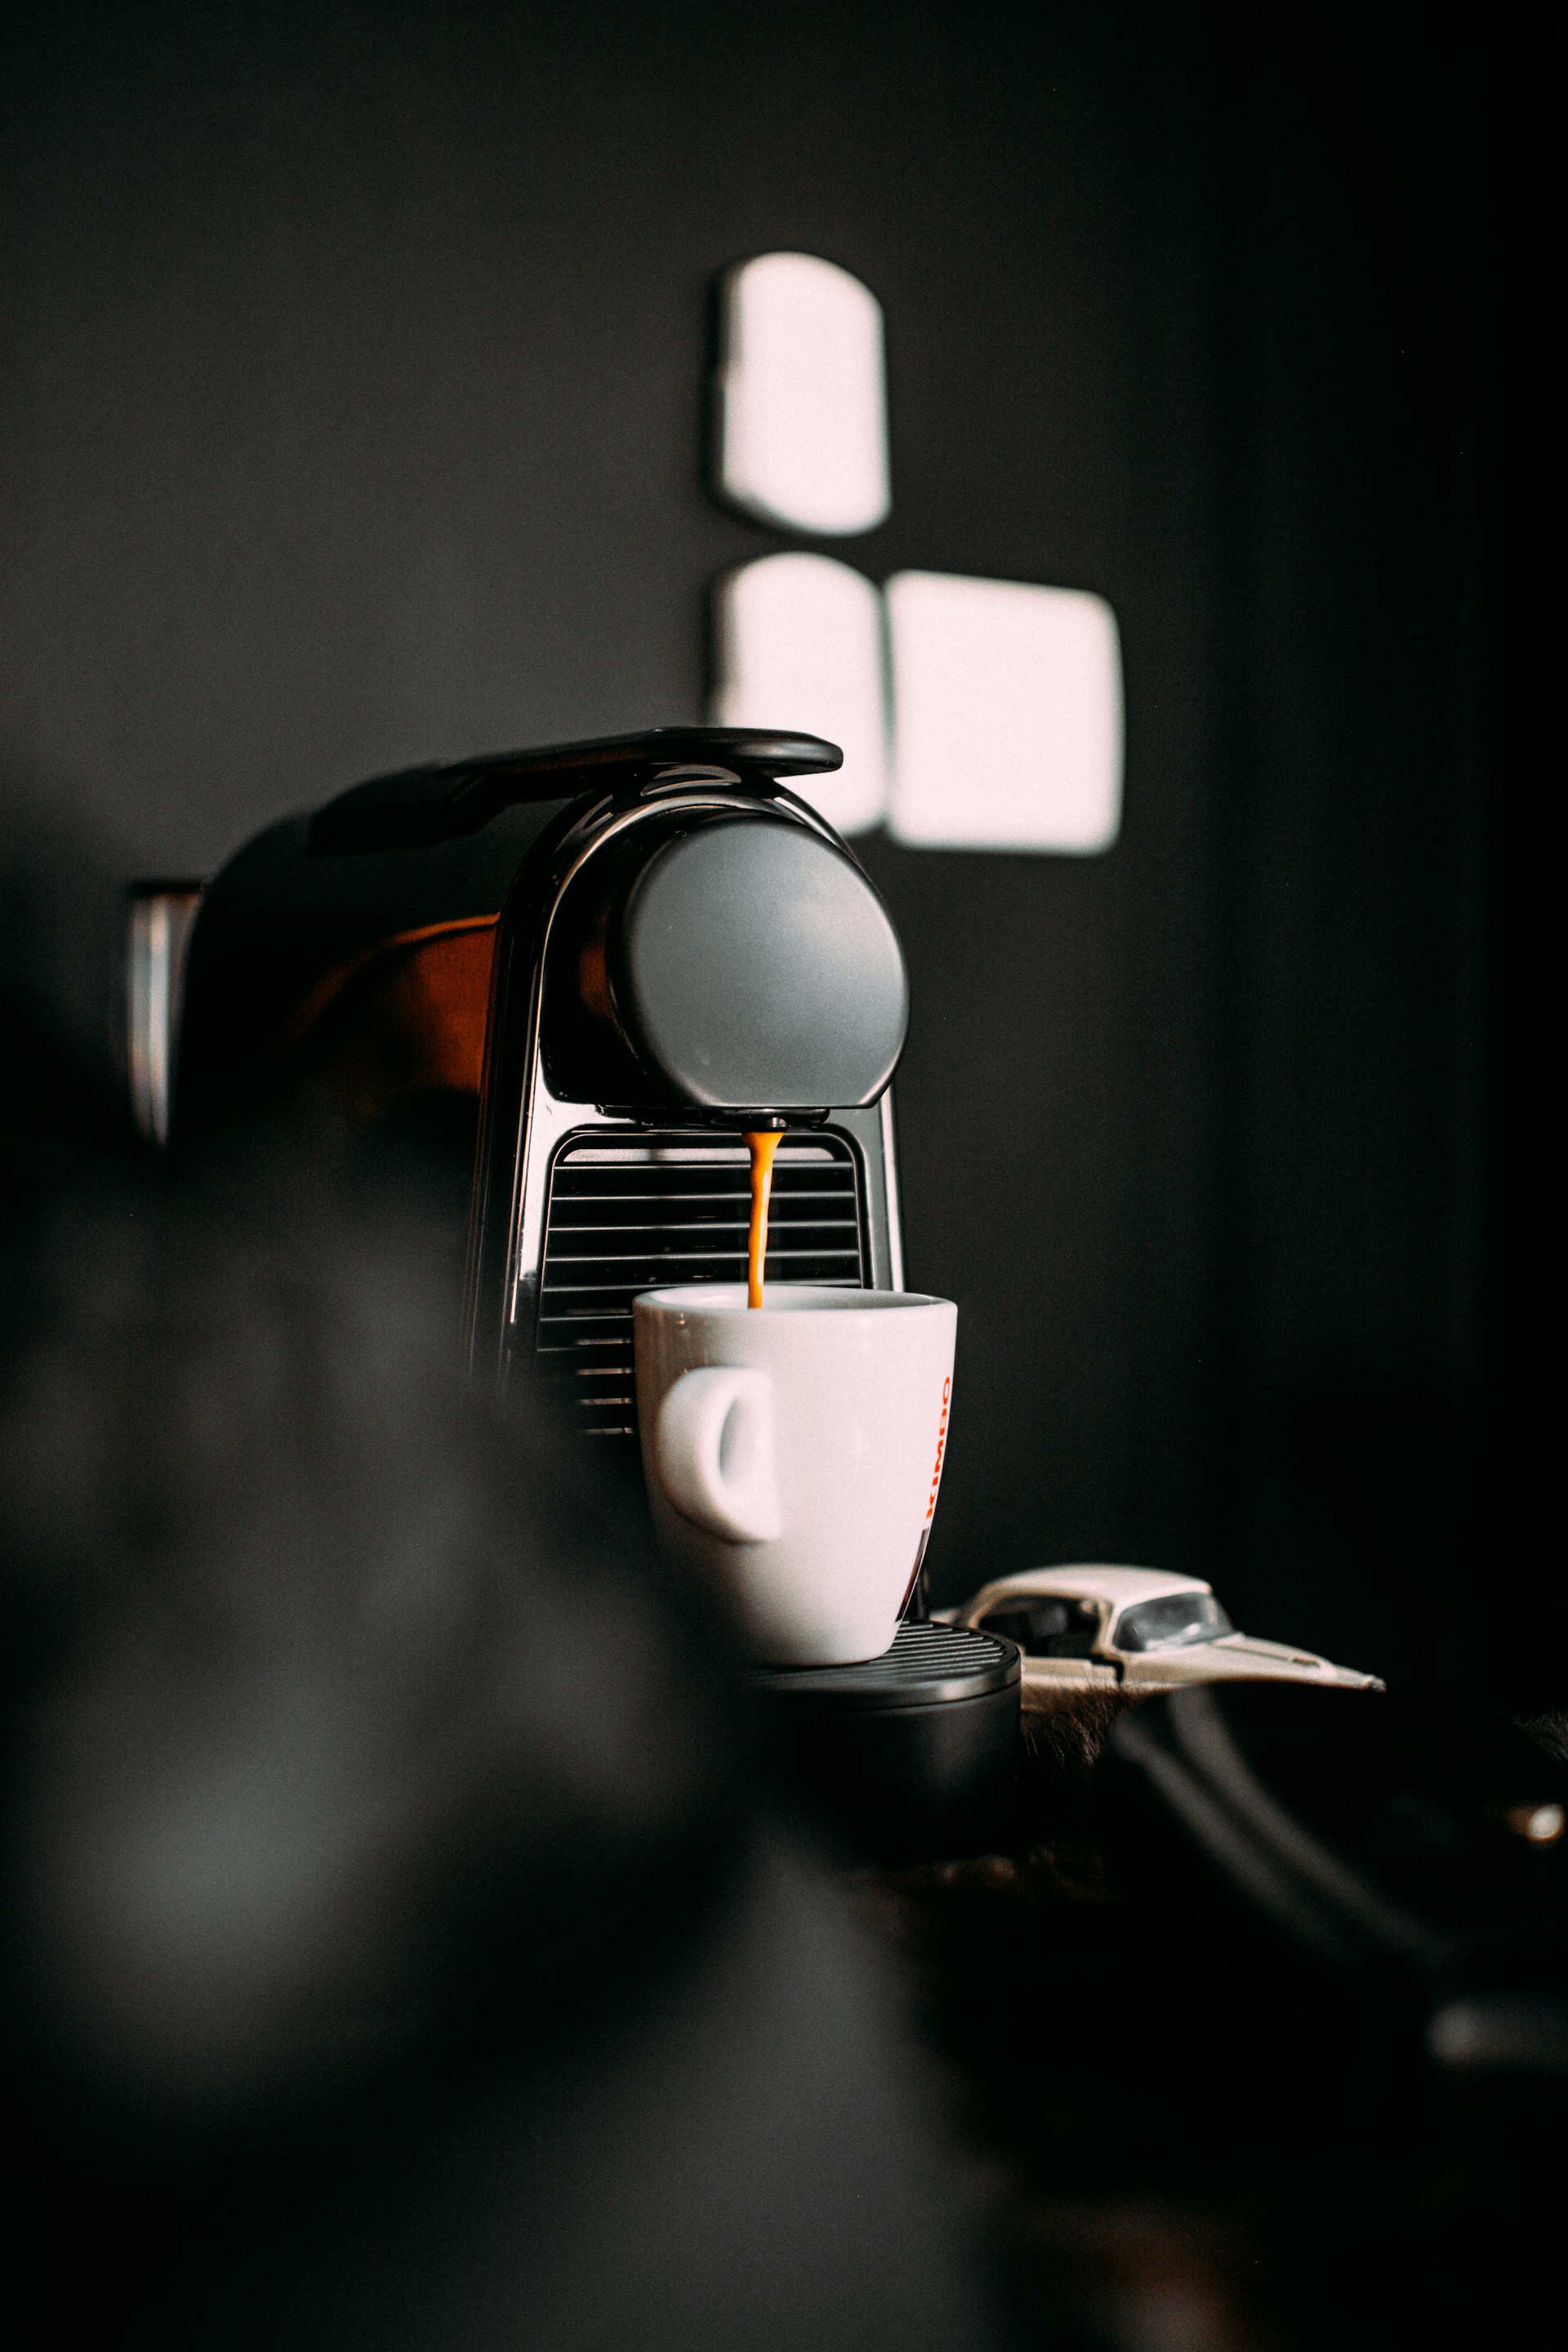 To κόλπο με τη Nespresso μηχανή που σου δίνει διπλή δόση espresso σε μια κάψουλα